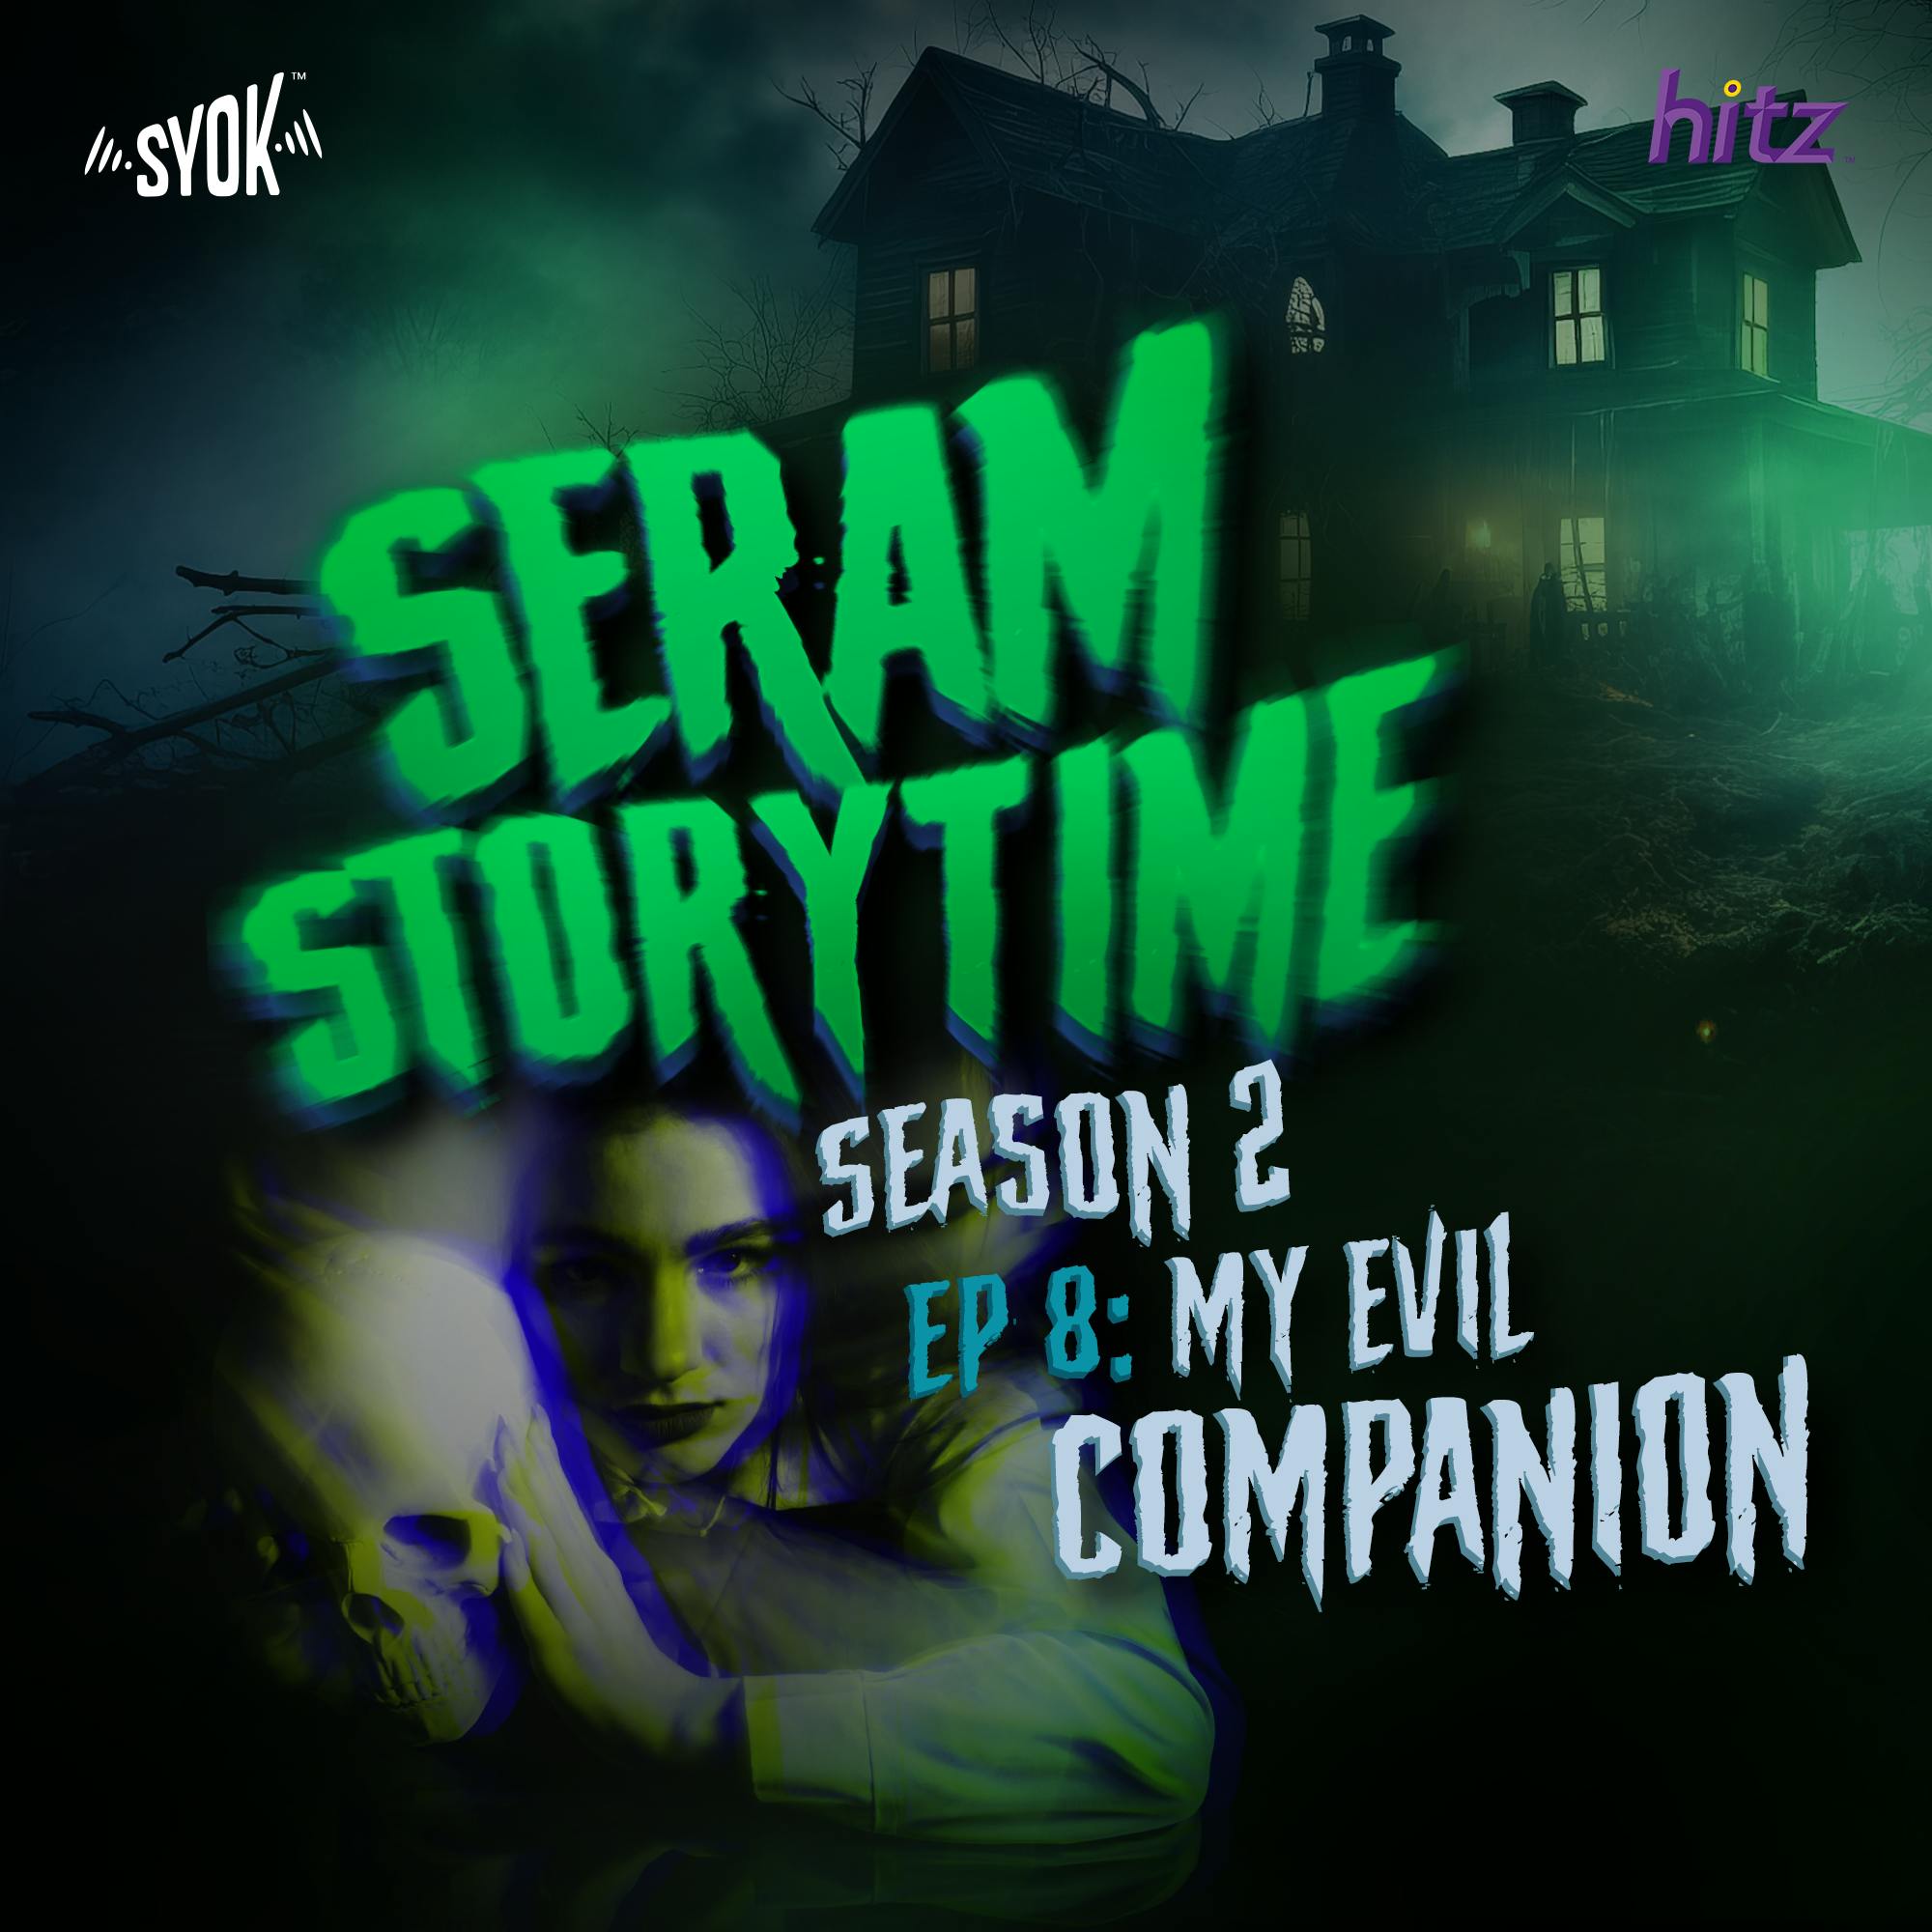 My Evil Companion | Seram Storytime S2E8